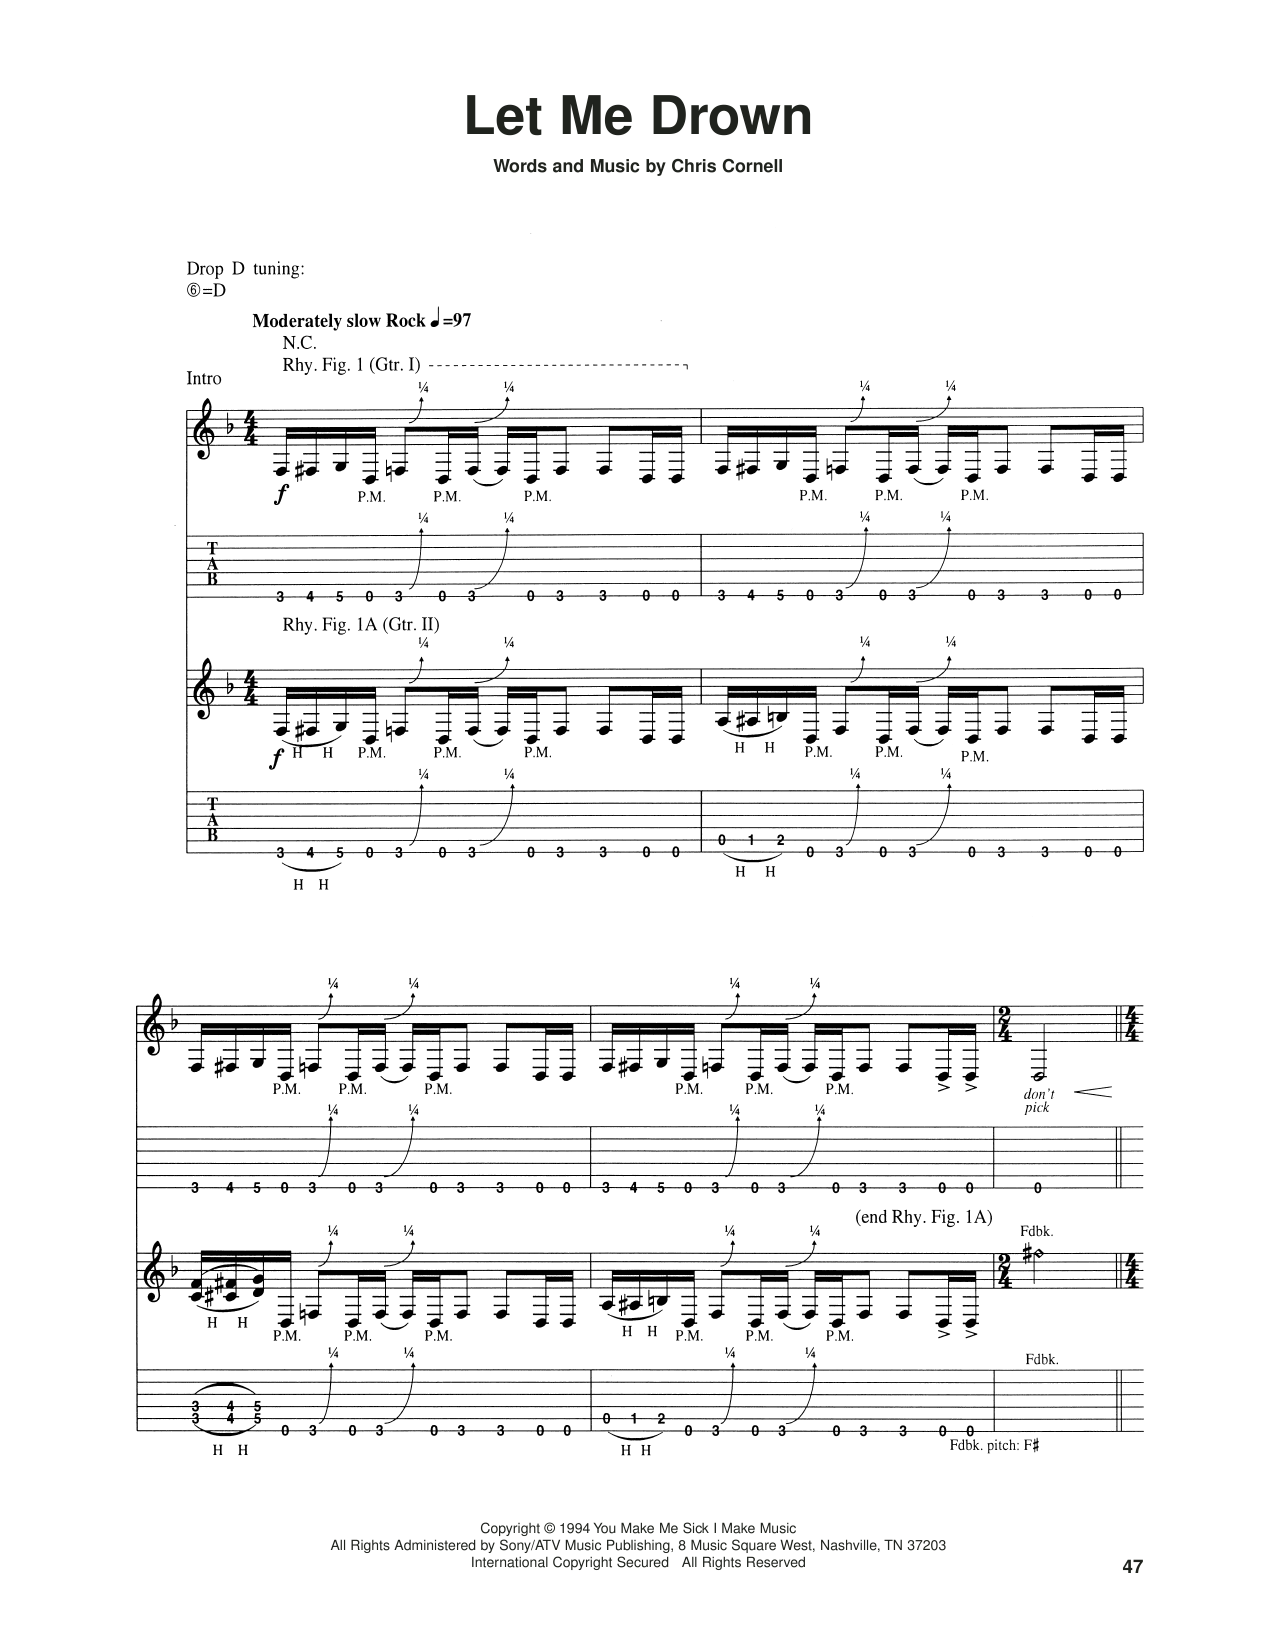 Soundgarden Let Me Drown Sheet Music Notes & Chords for Guitar Tab - Download or Print PDF